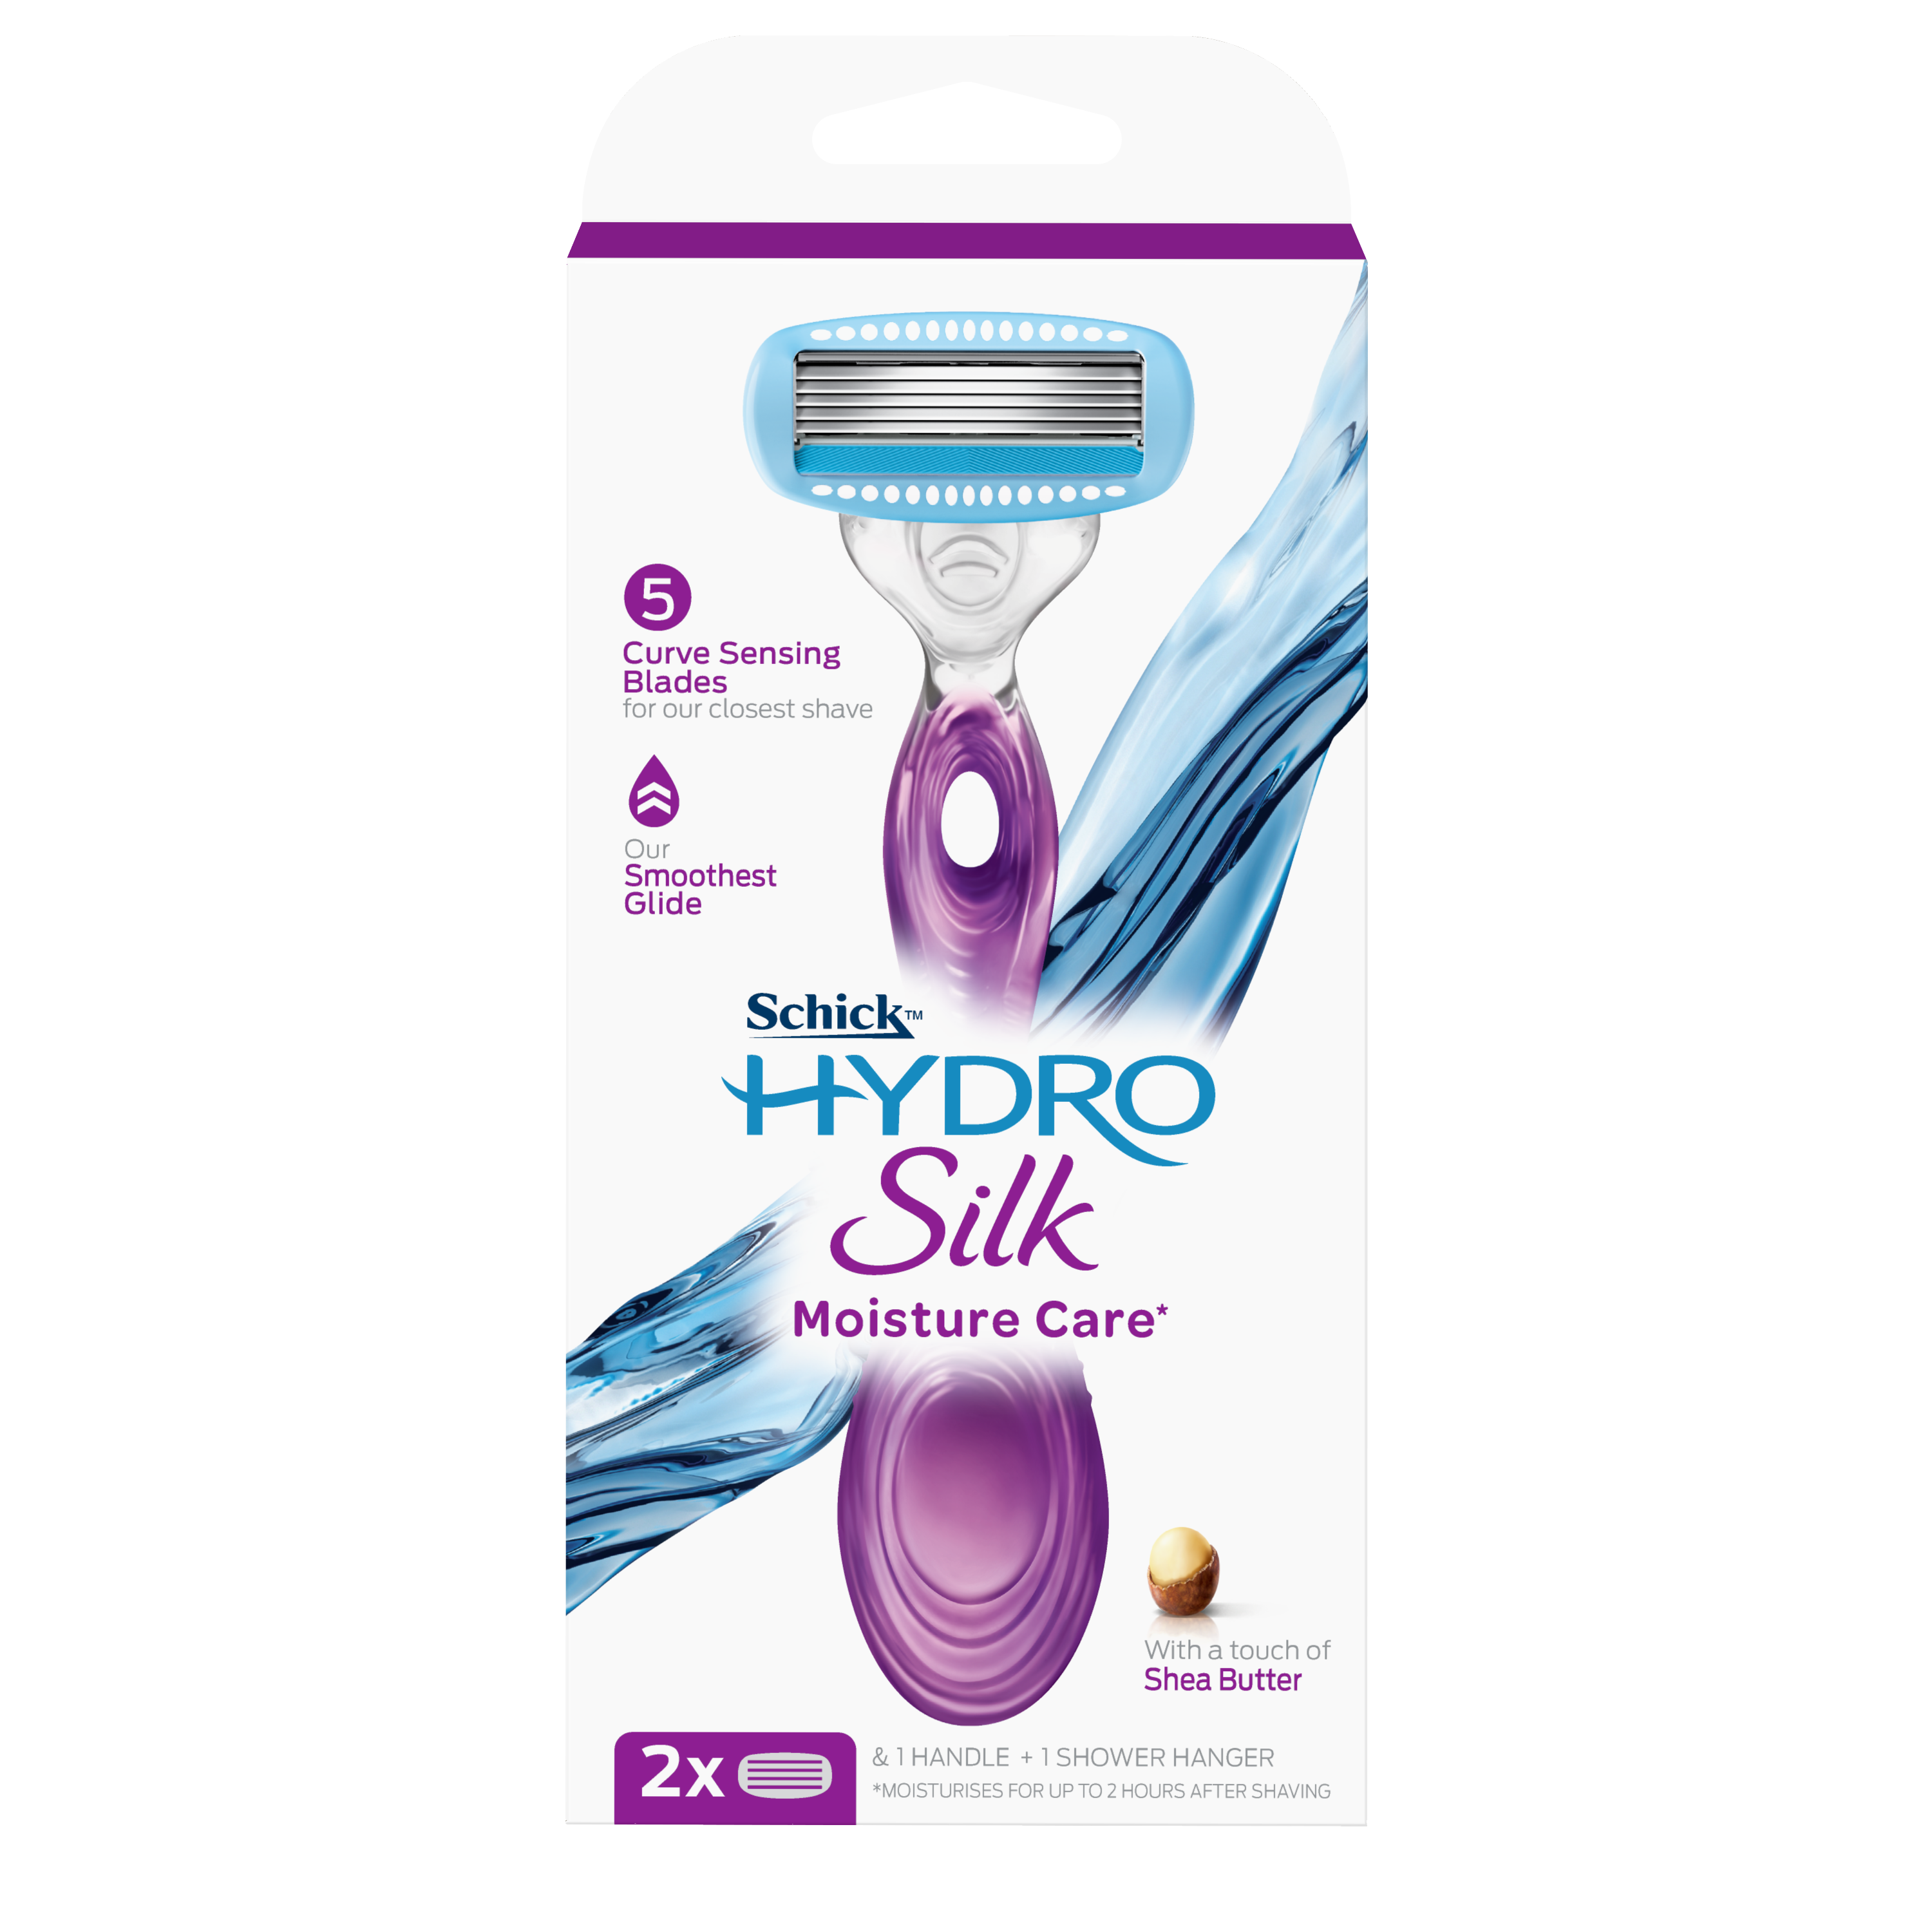 Hydro Silk Razor